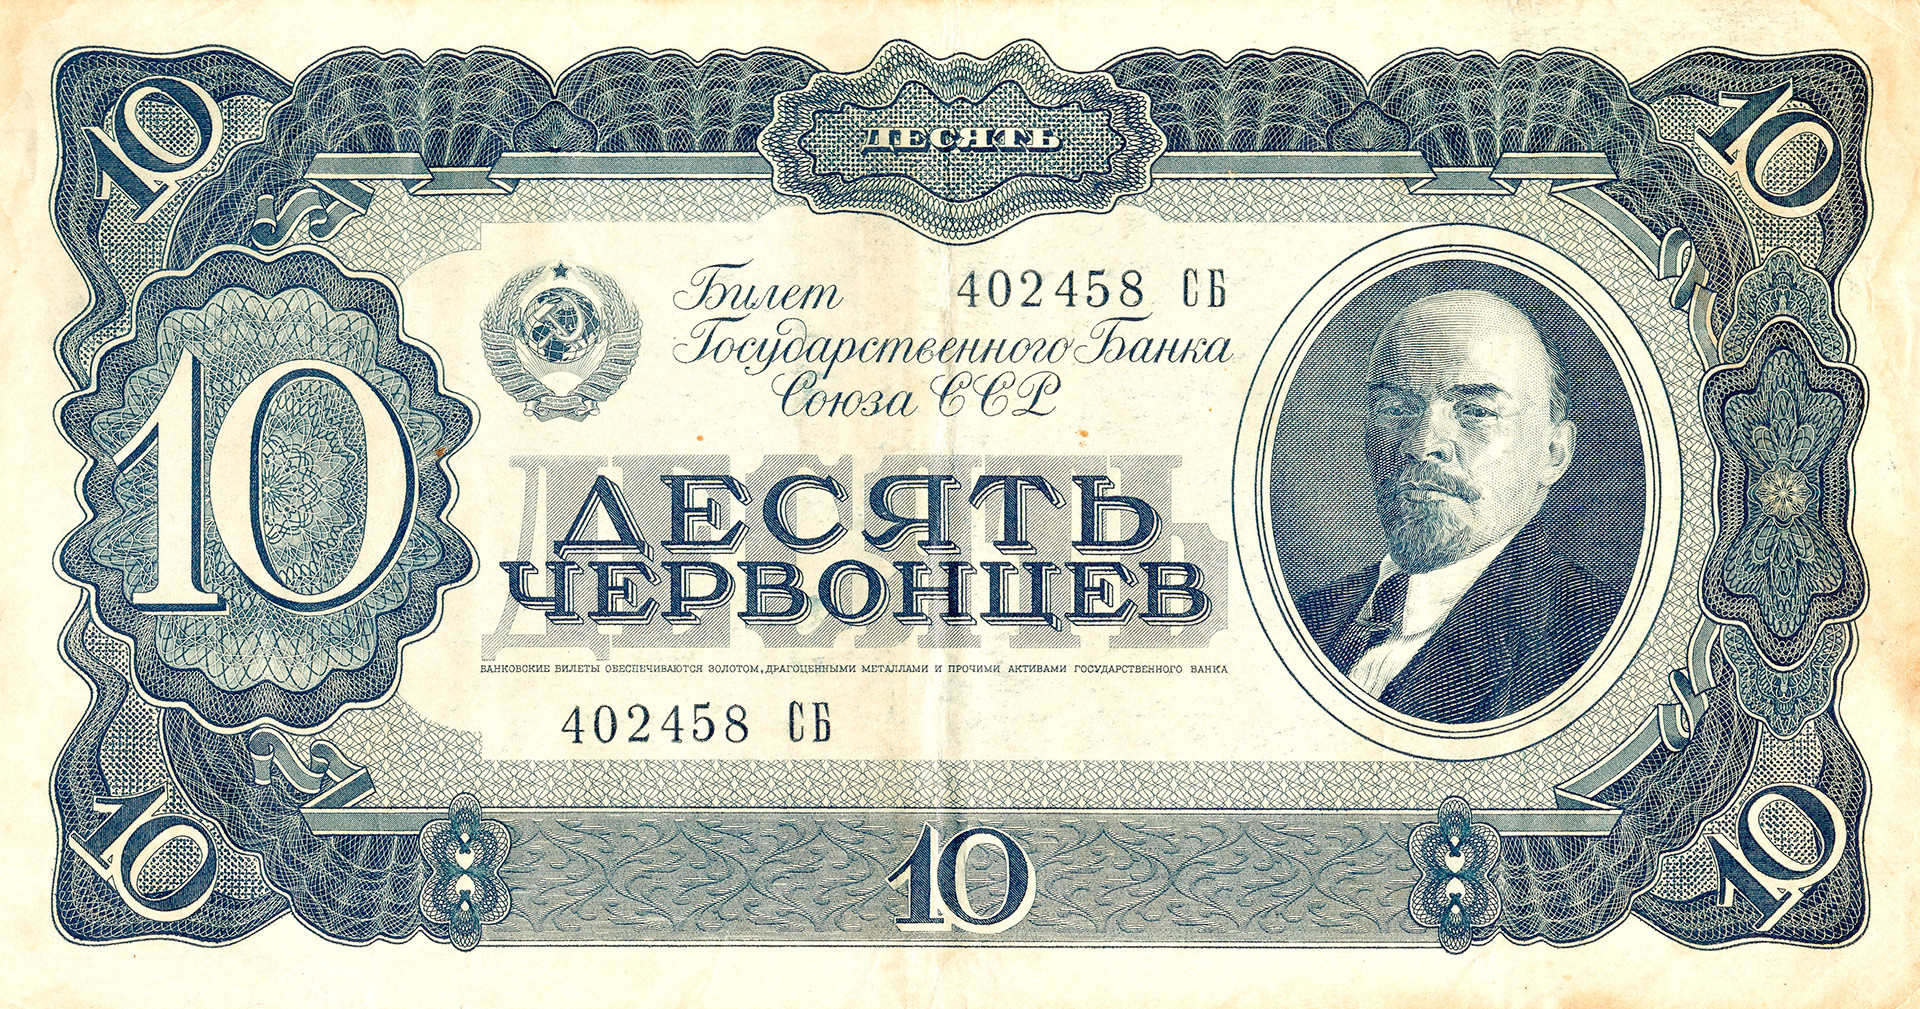 A 10-ruble chervonets